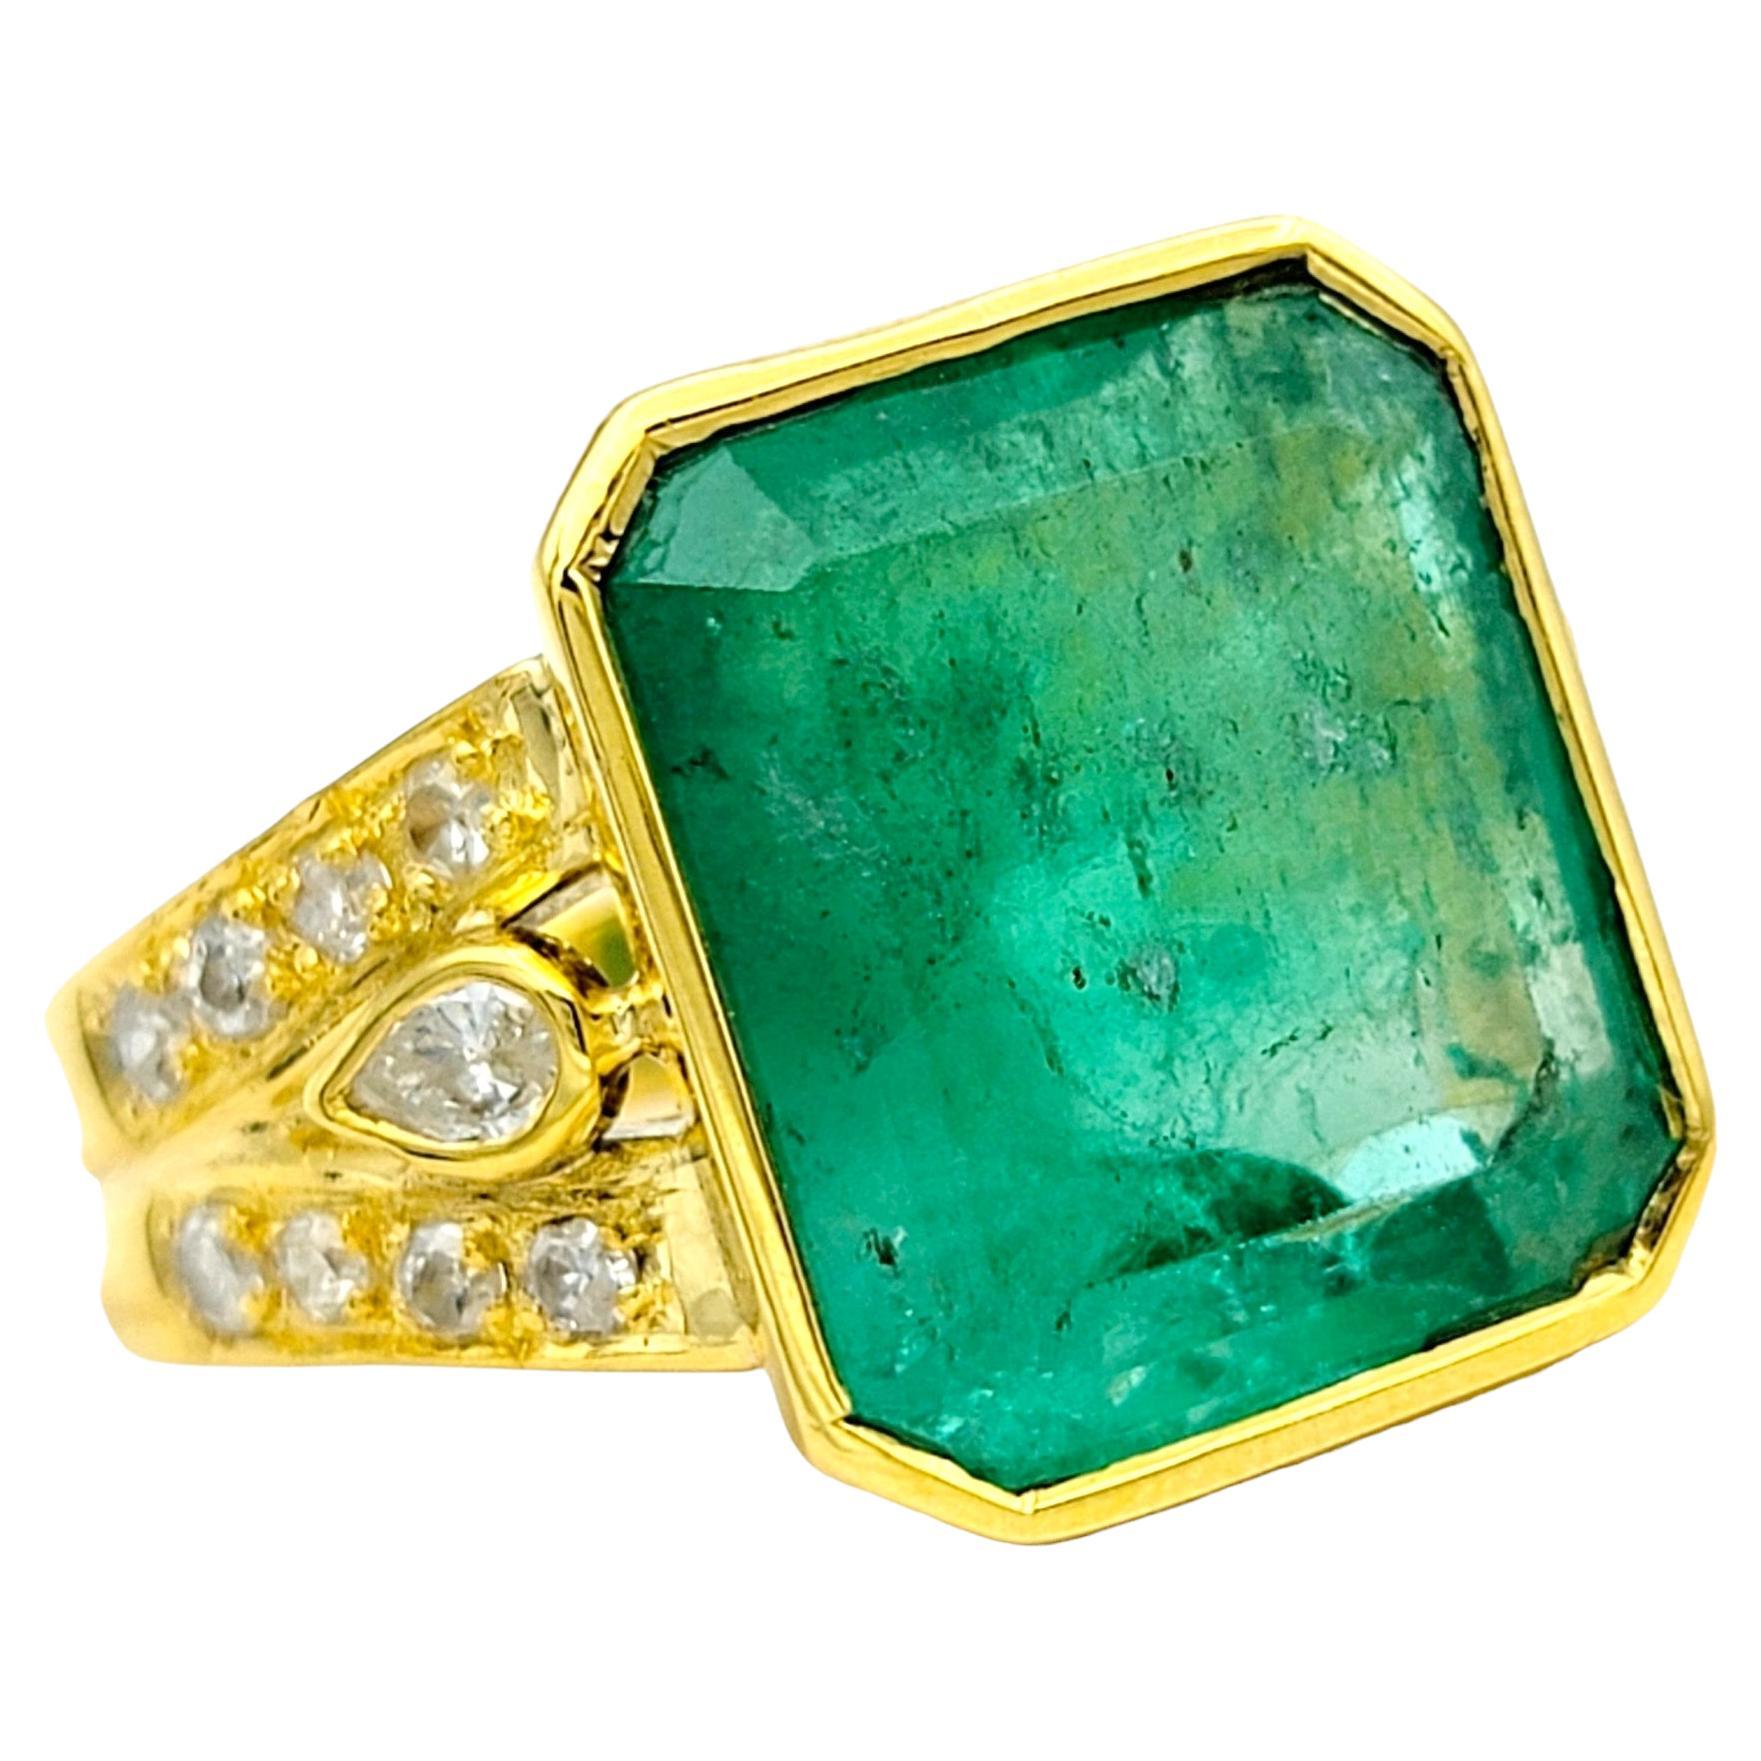 Emerald Cut Emerald and Diamond Shank Cocktail Ring Set in 18 Karat Yellow Gold